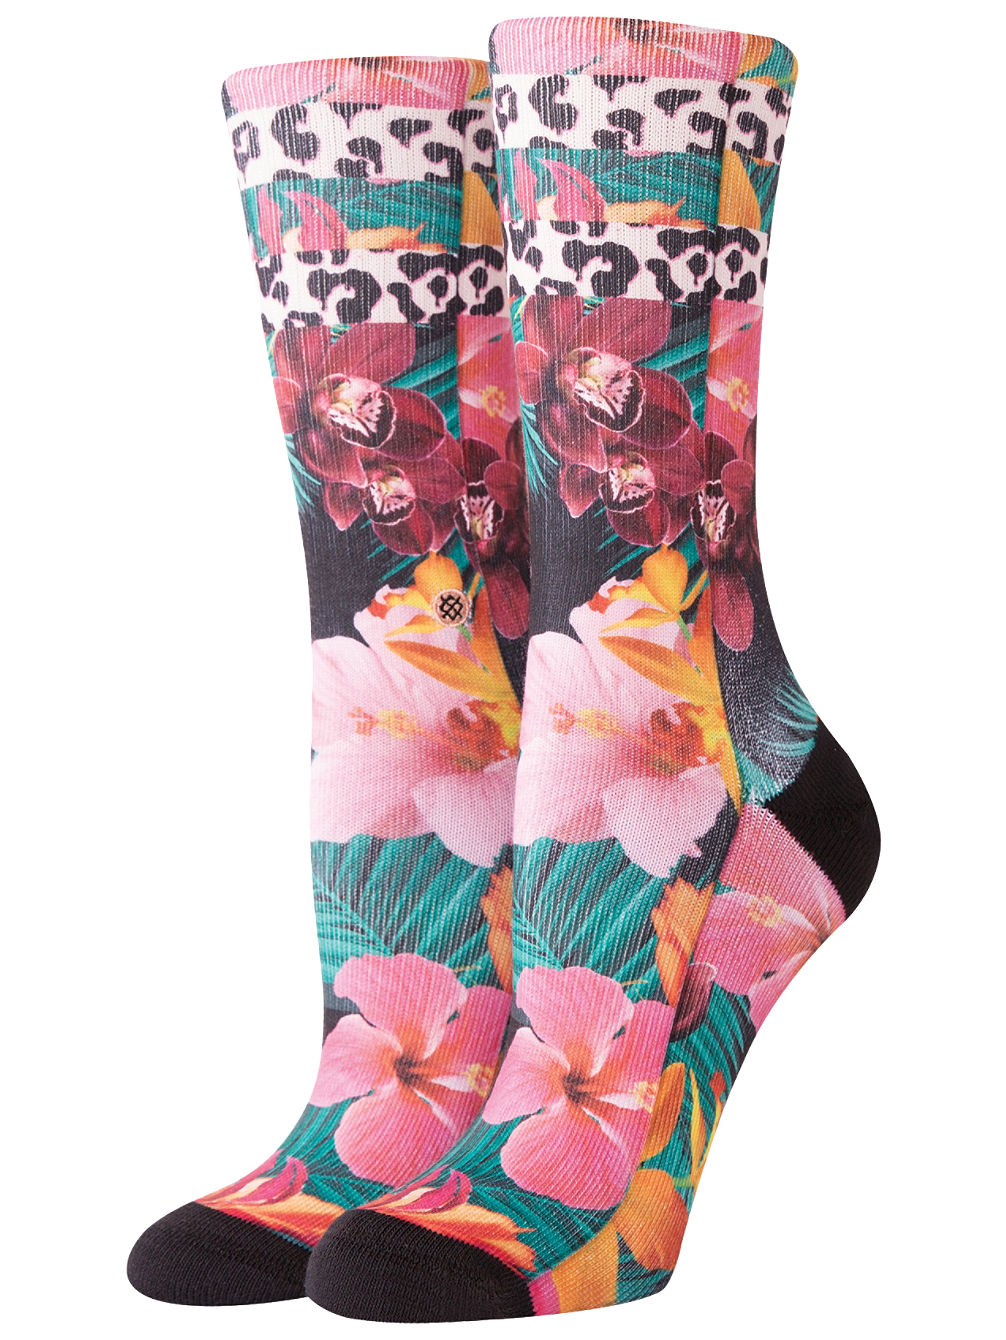 El Hibisco Socks